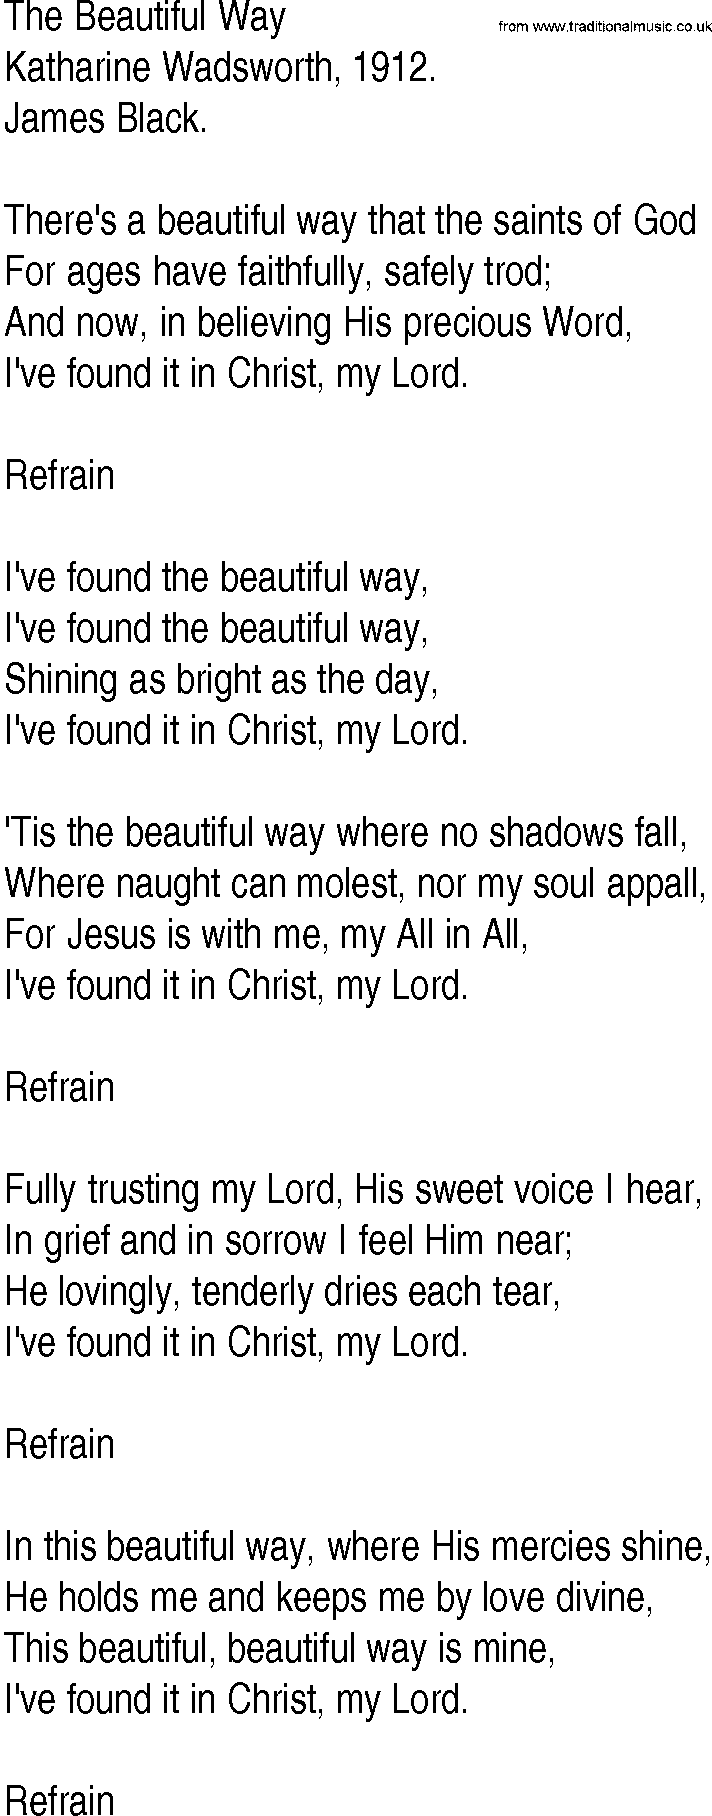 Hymn and Gospel Song: The Beautiful Way by Katharine Wadsworth lyrics